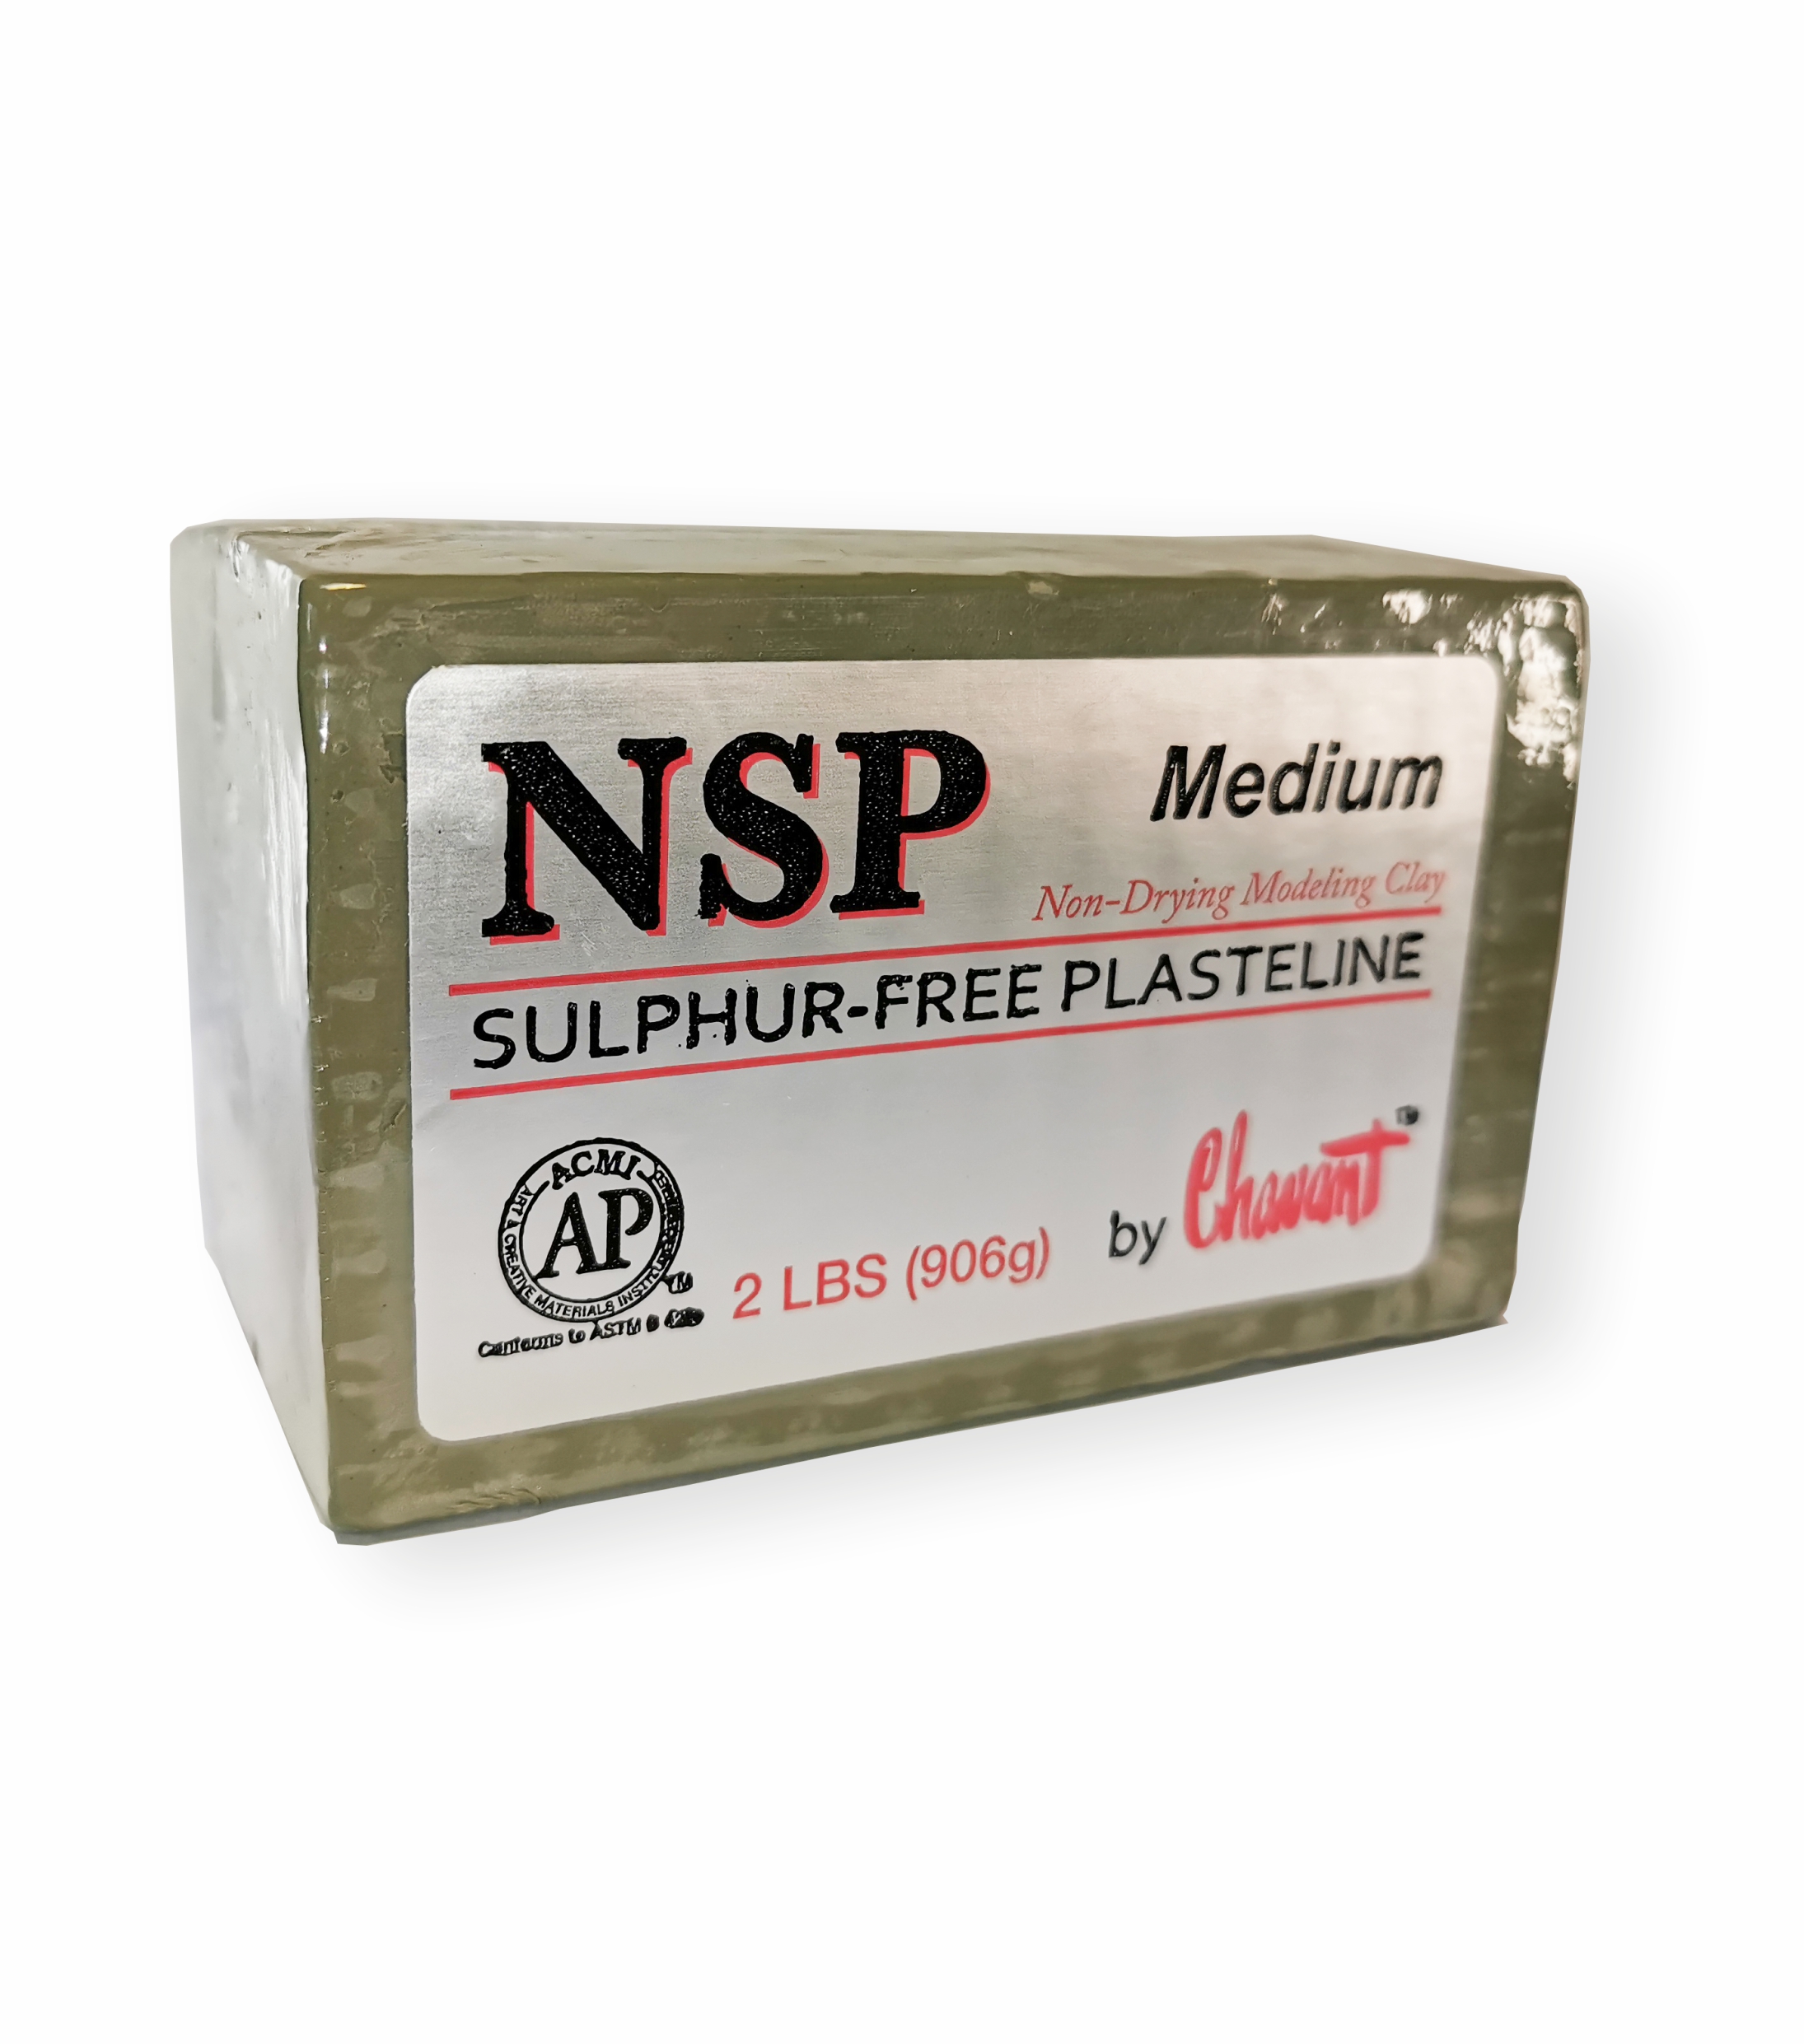 Скульптурный пластилин NSP-medium by chavant